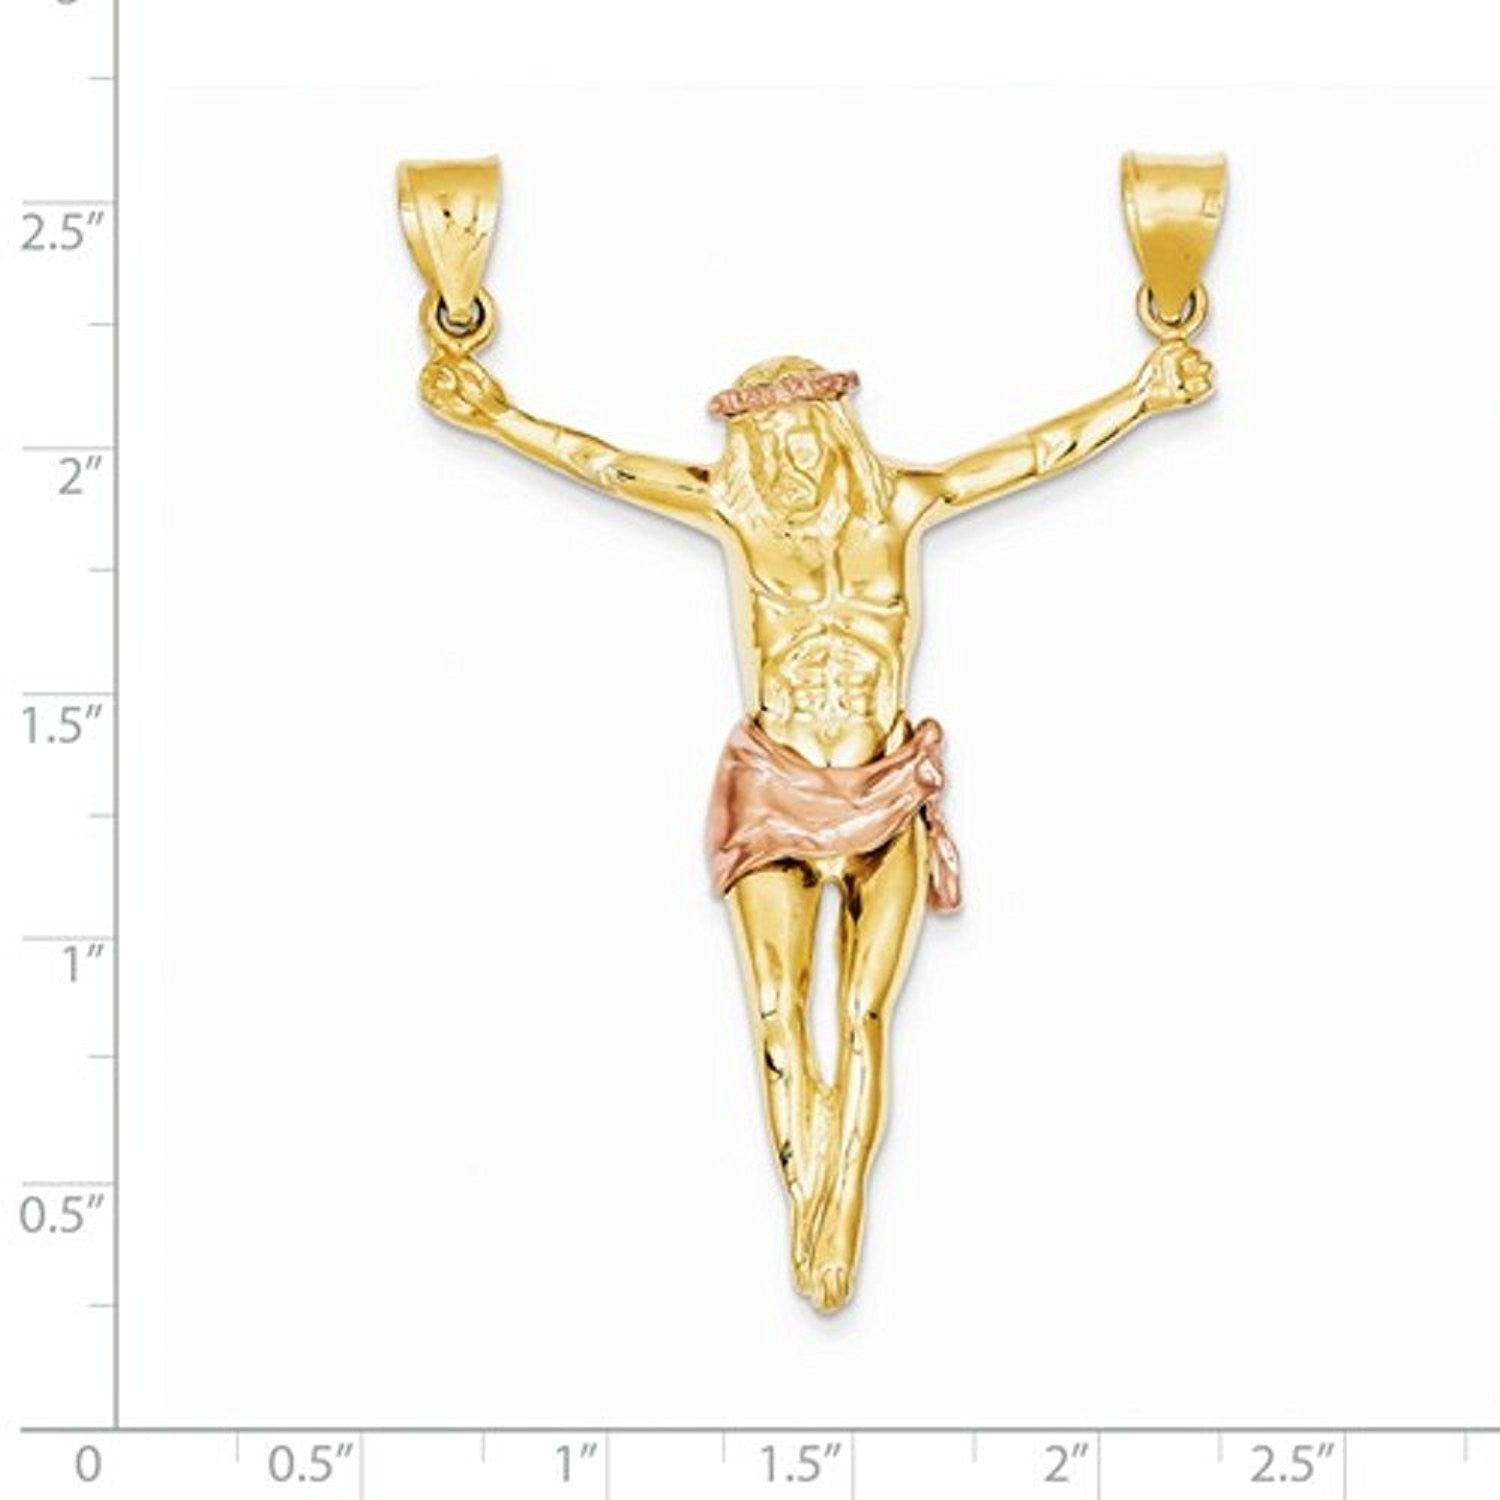 14k Gold Two Tone Corpus Crucified Christ Pendant Charm - [cklinternational]